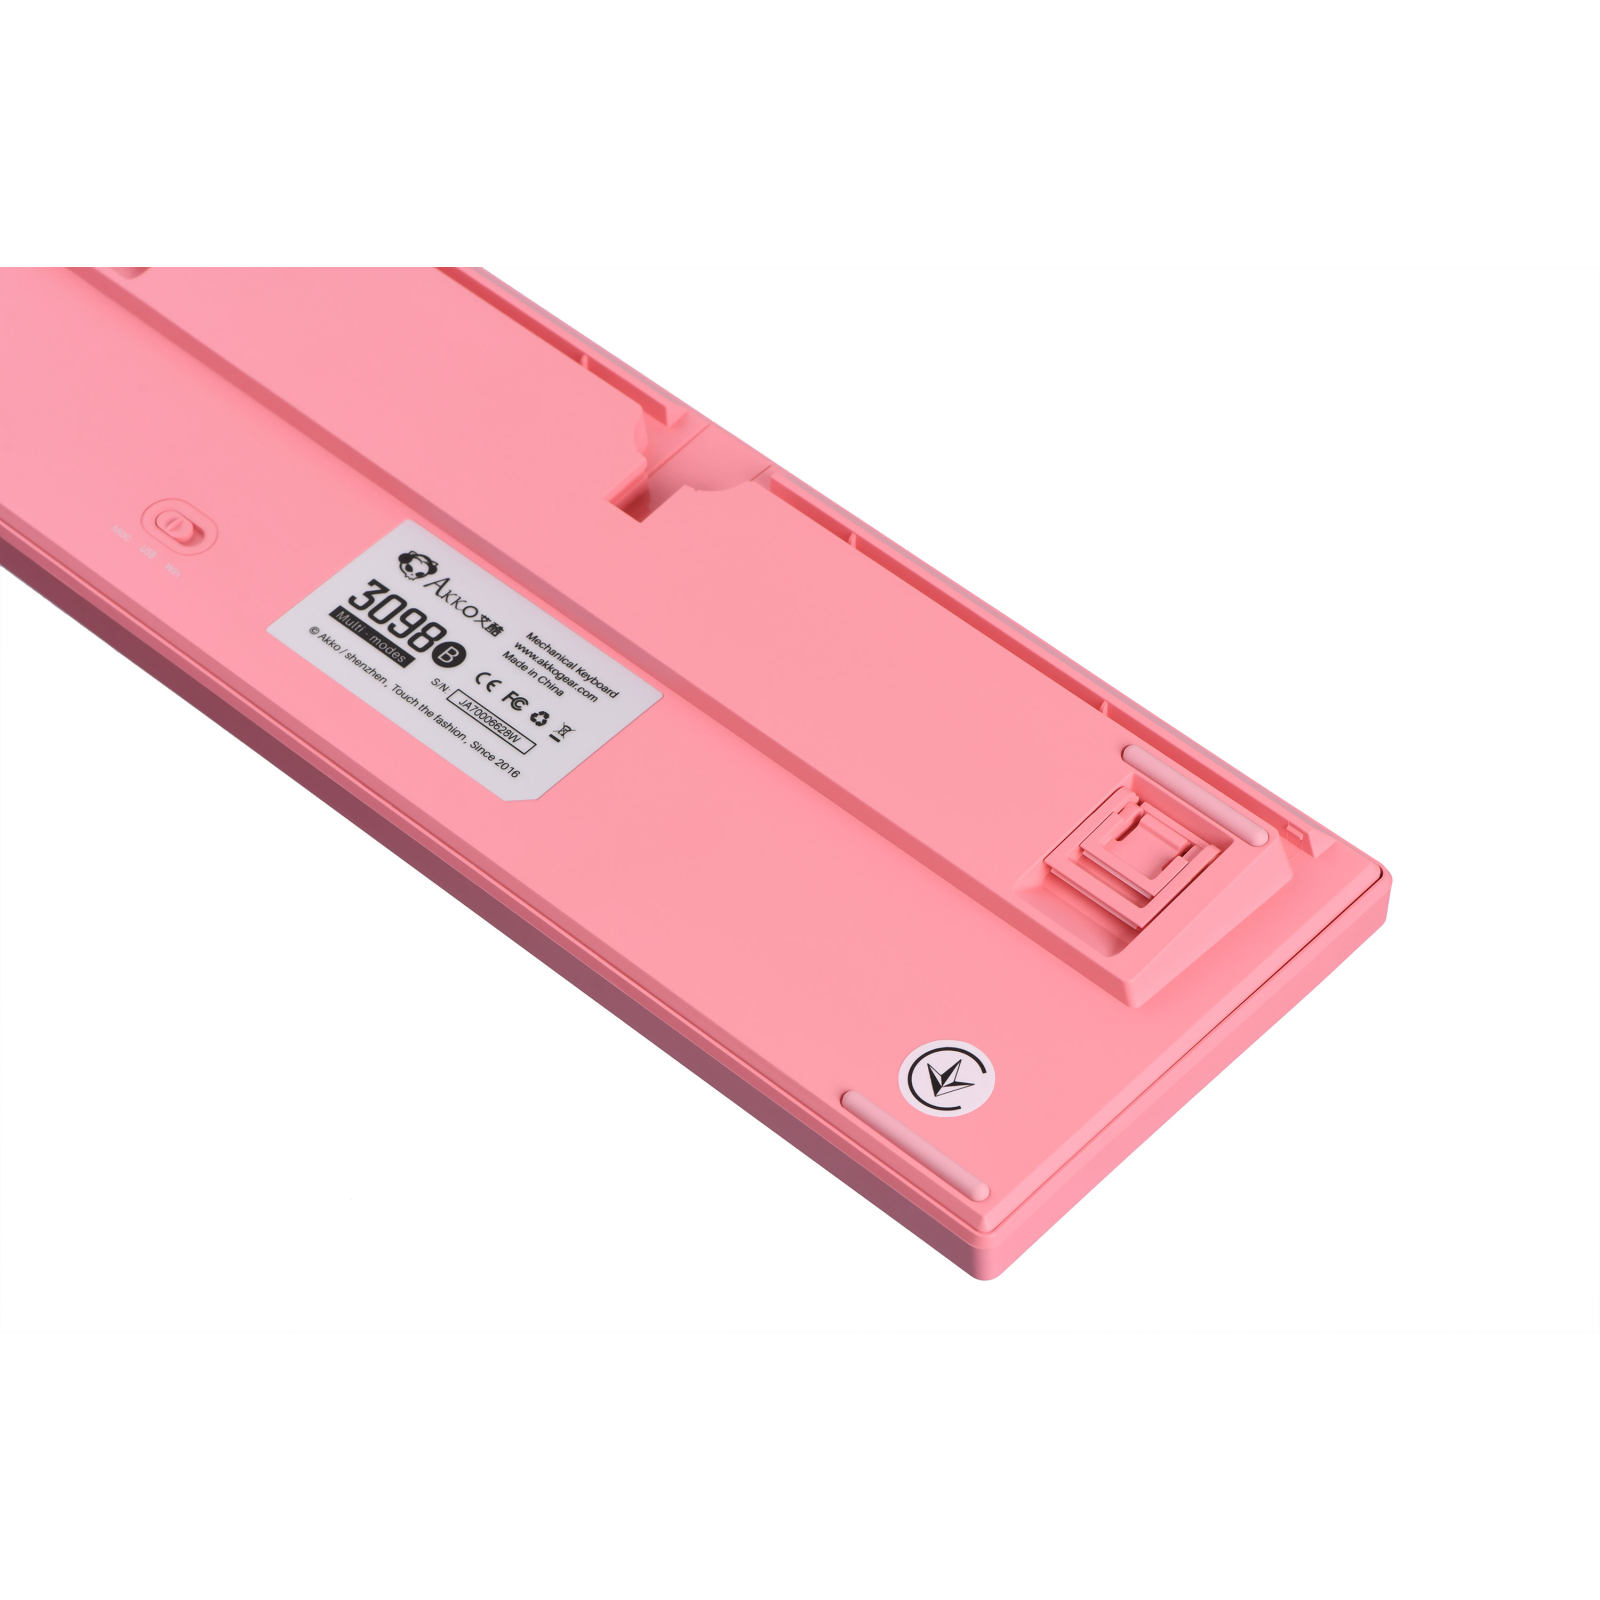 Клавиатура Akko 3098B World Tour-Tokyo R2 98Key TTC Speed Silver Hot-swappable UA RGB Pink (6925758610834) изображение 12